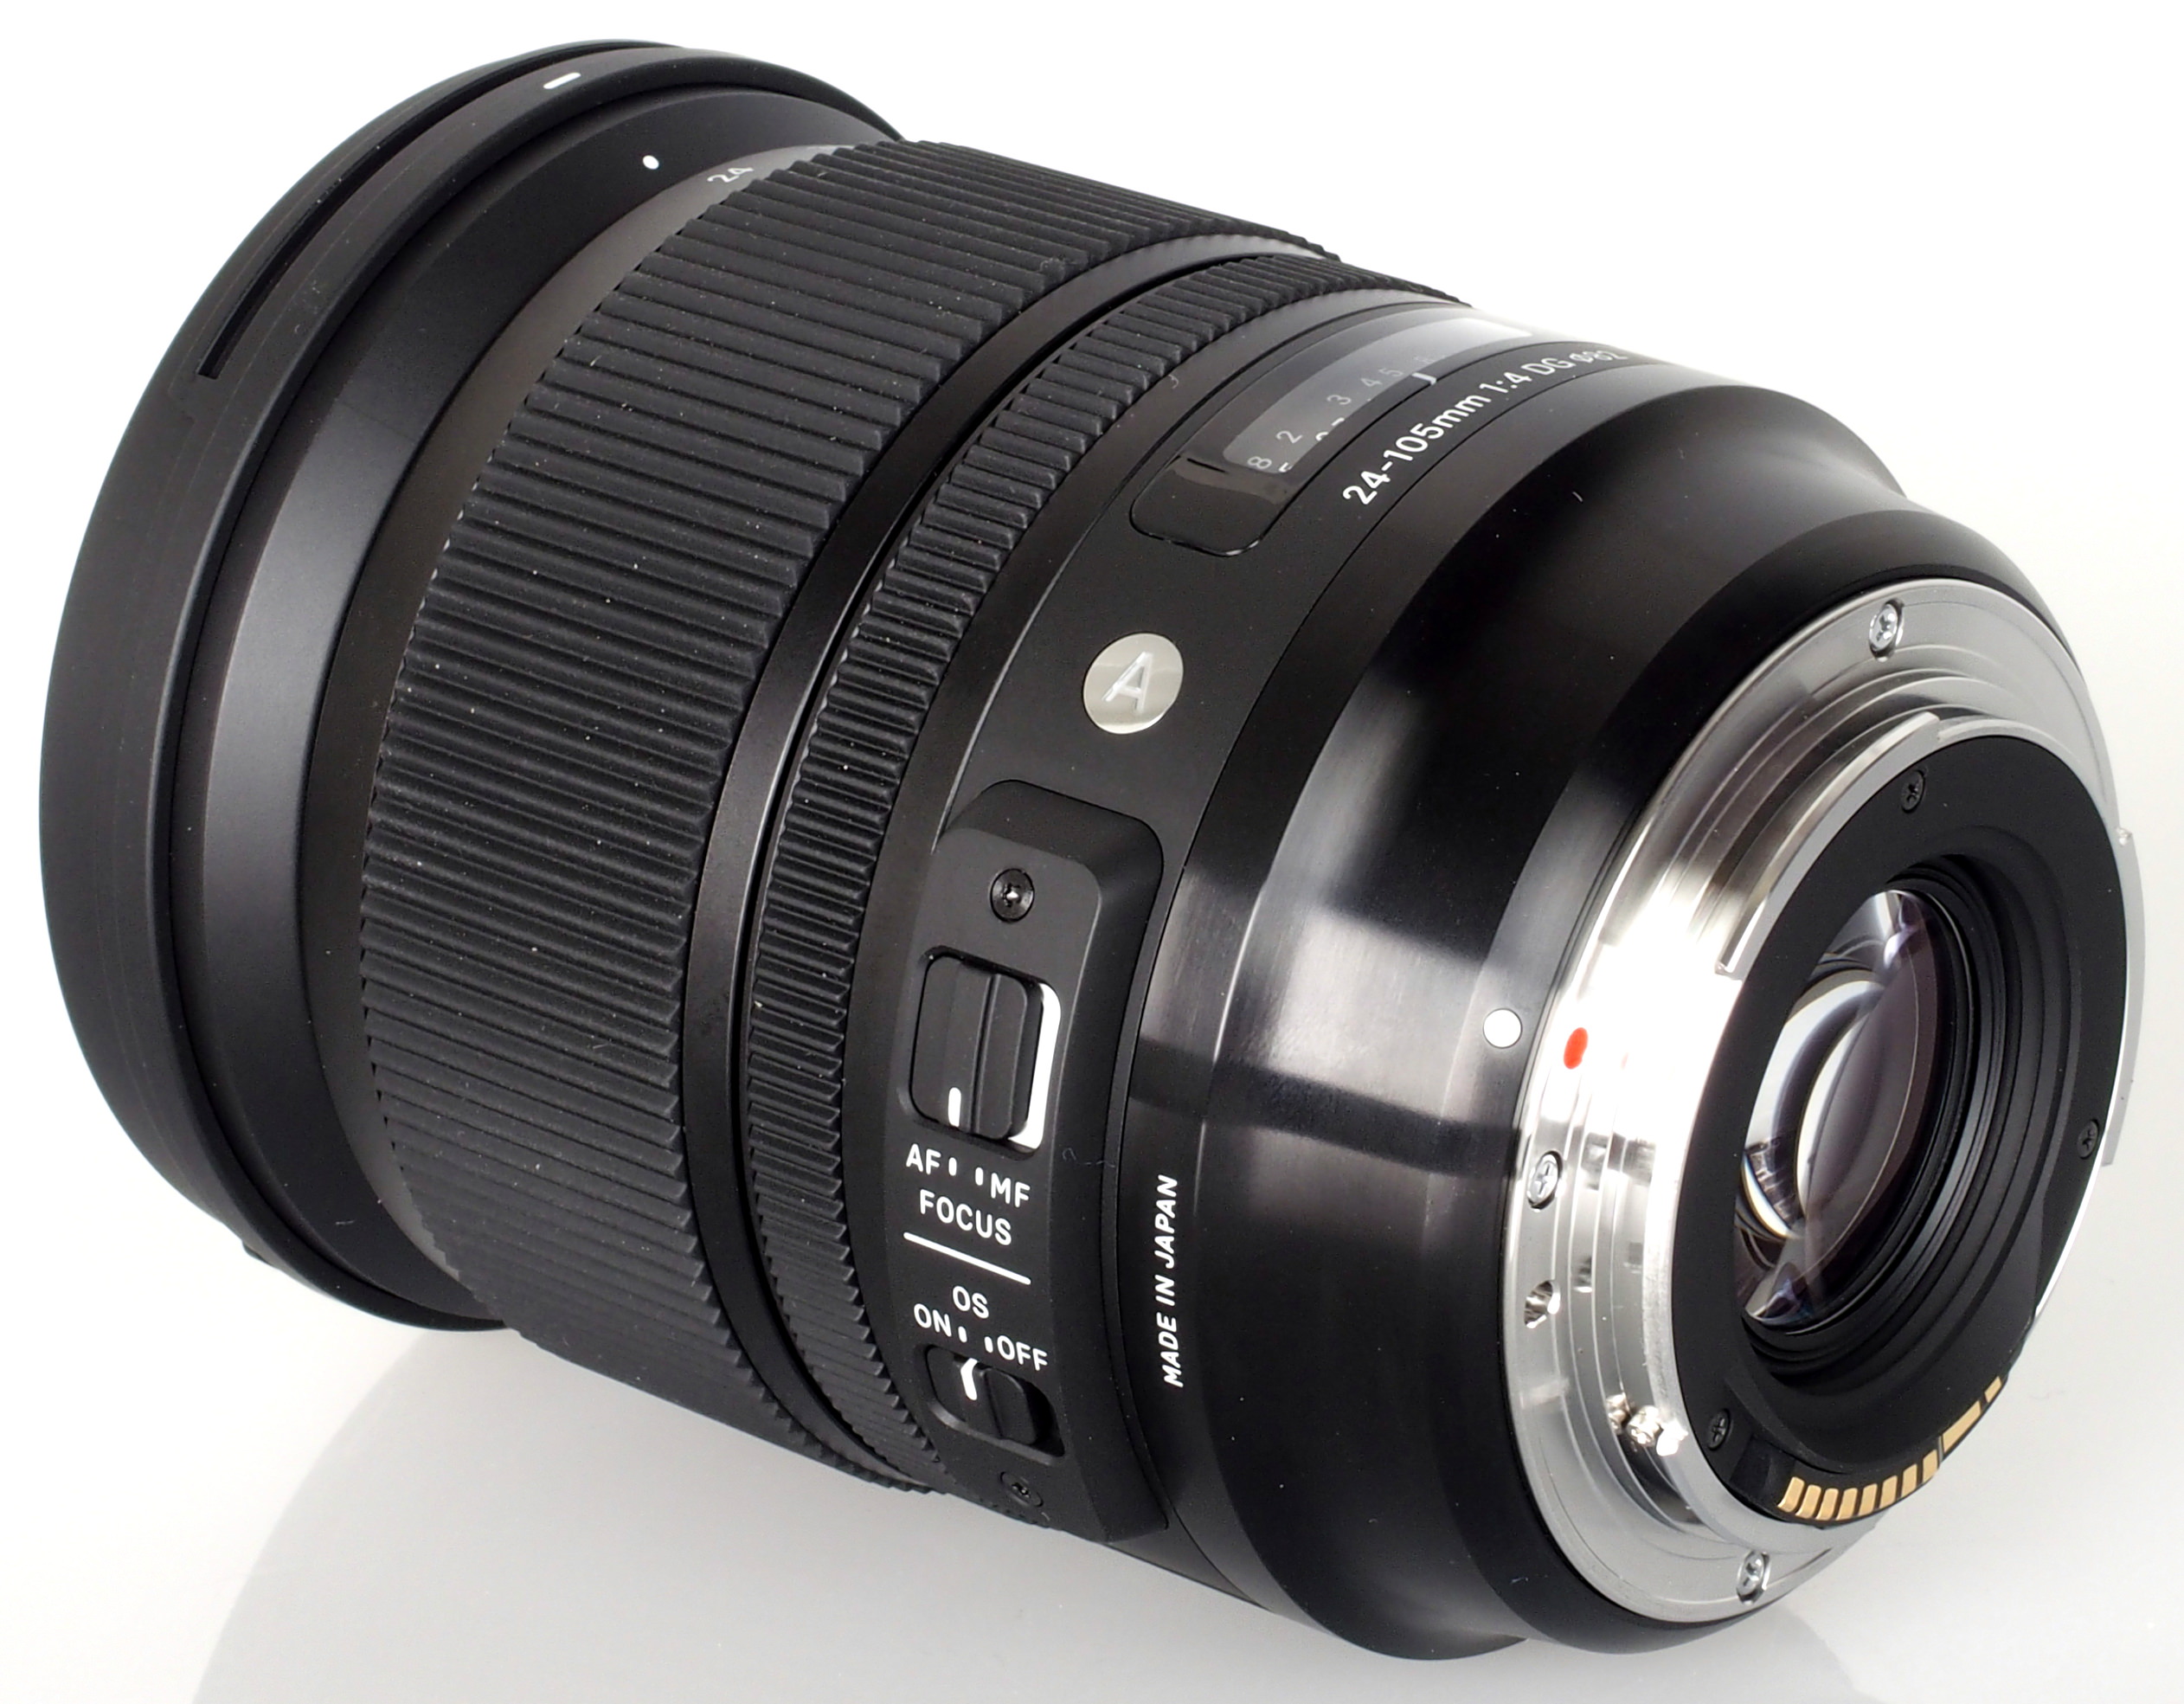 Sigma 24-105mm f/4 DG OS HSM A Lens Review